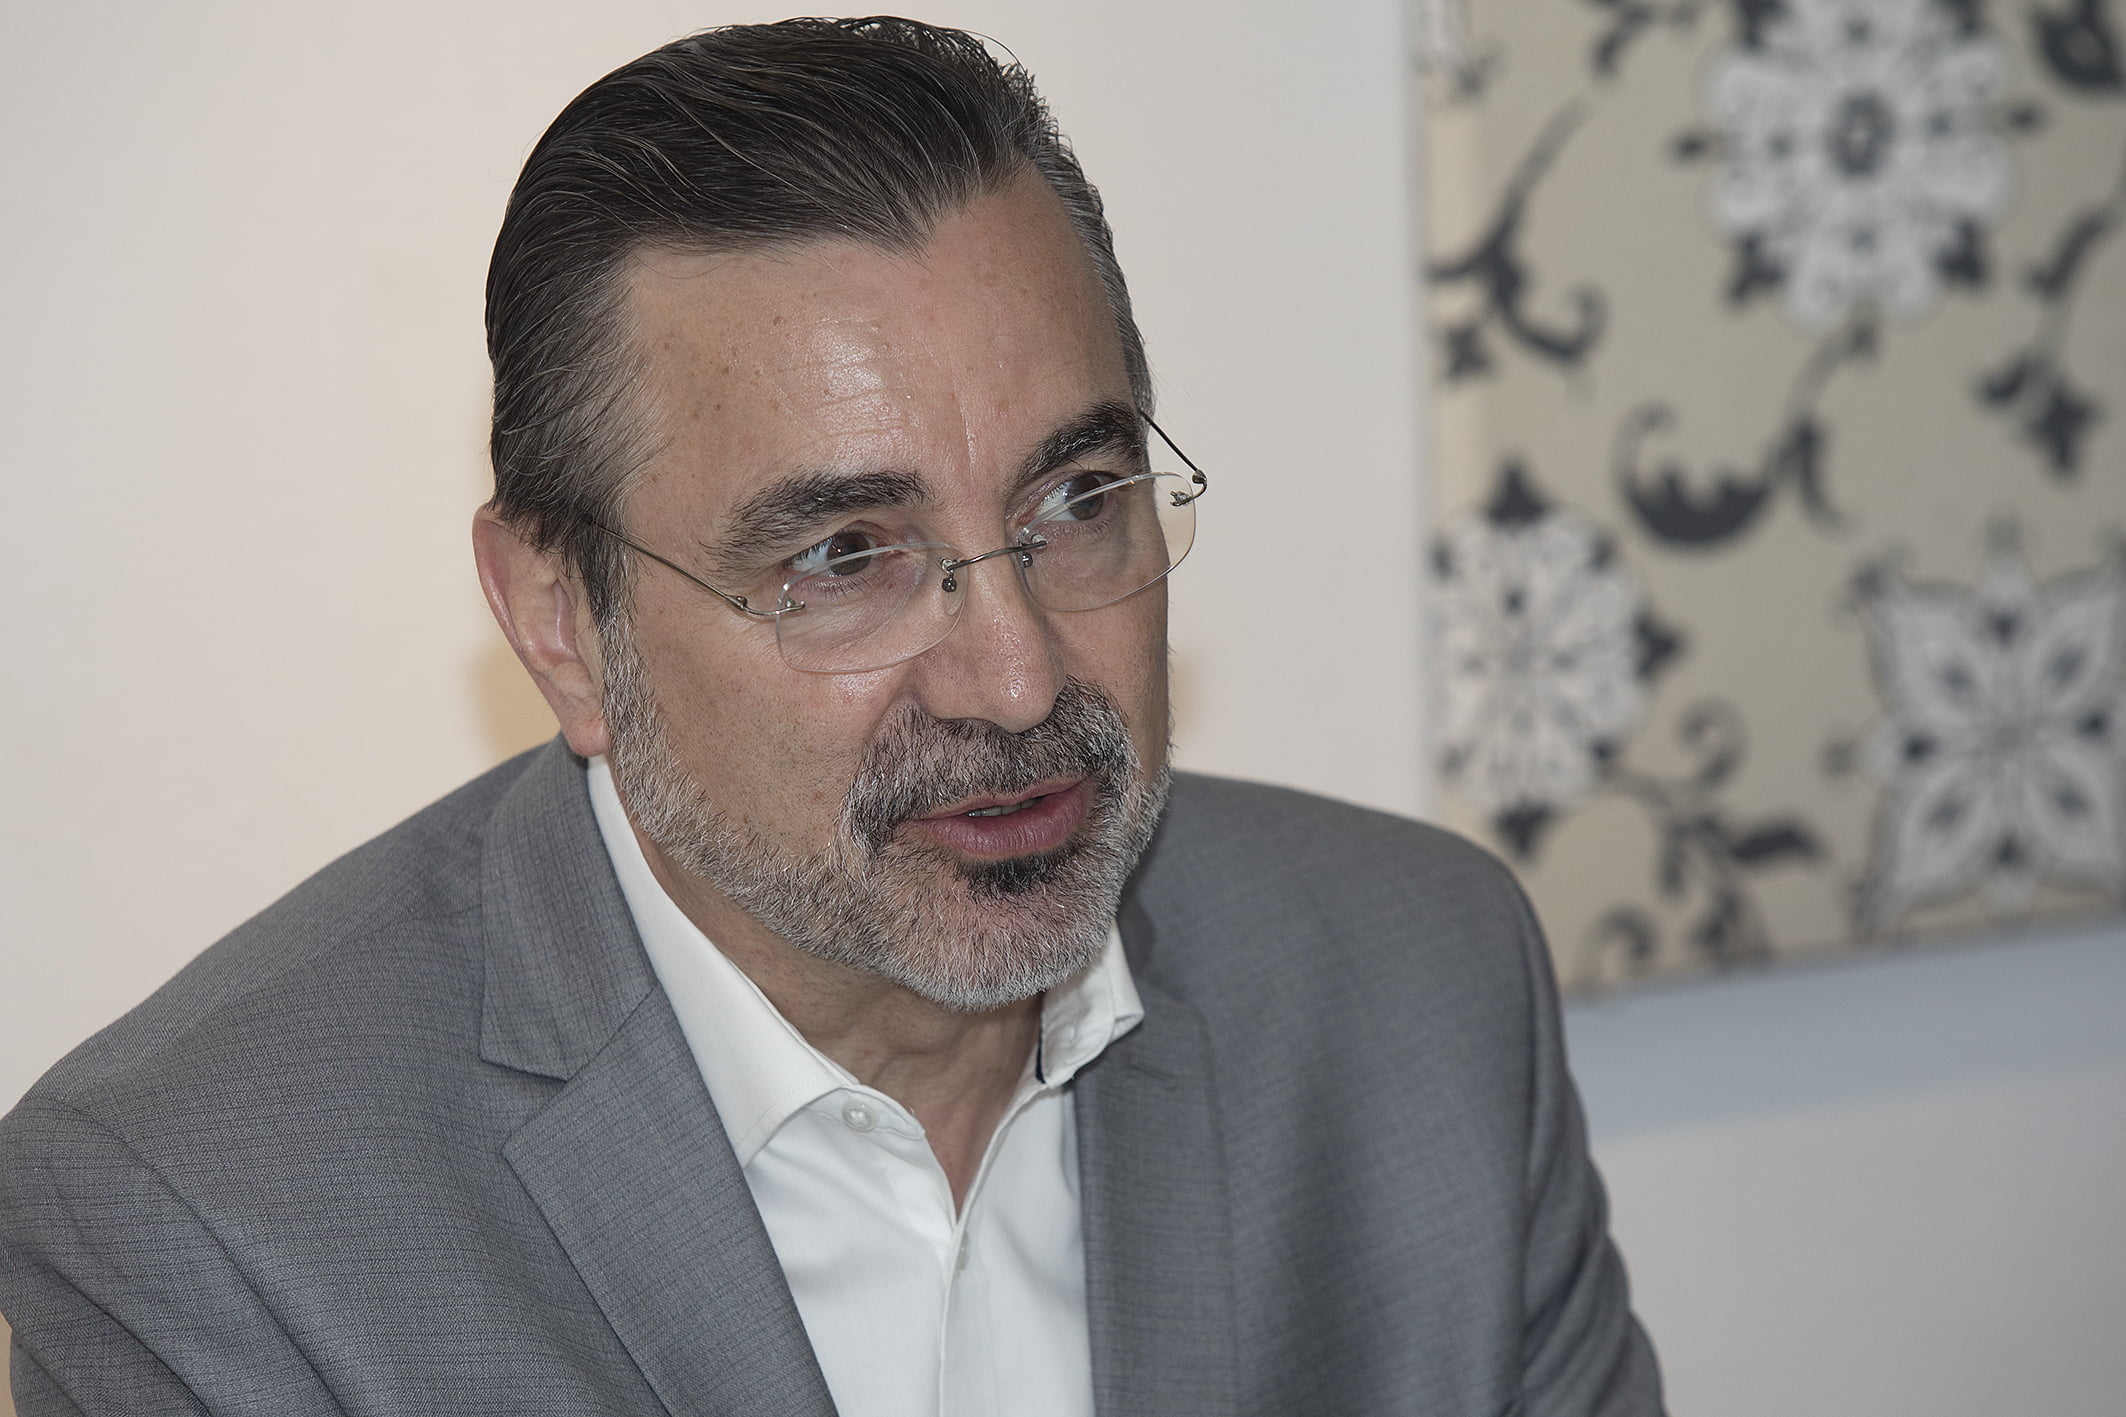 Néstor Serravalle, Executive Vice President for Europe of VU